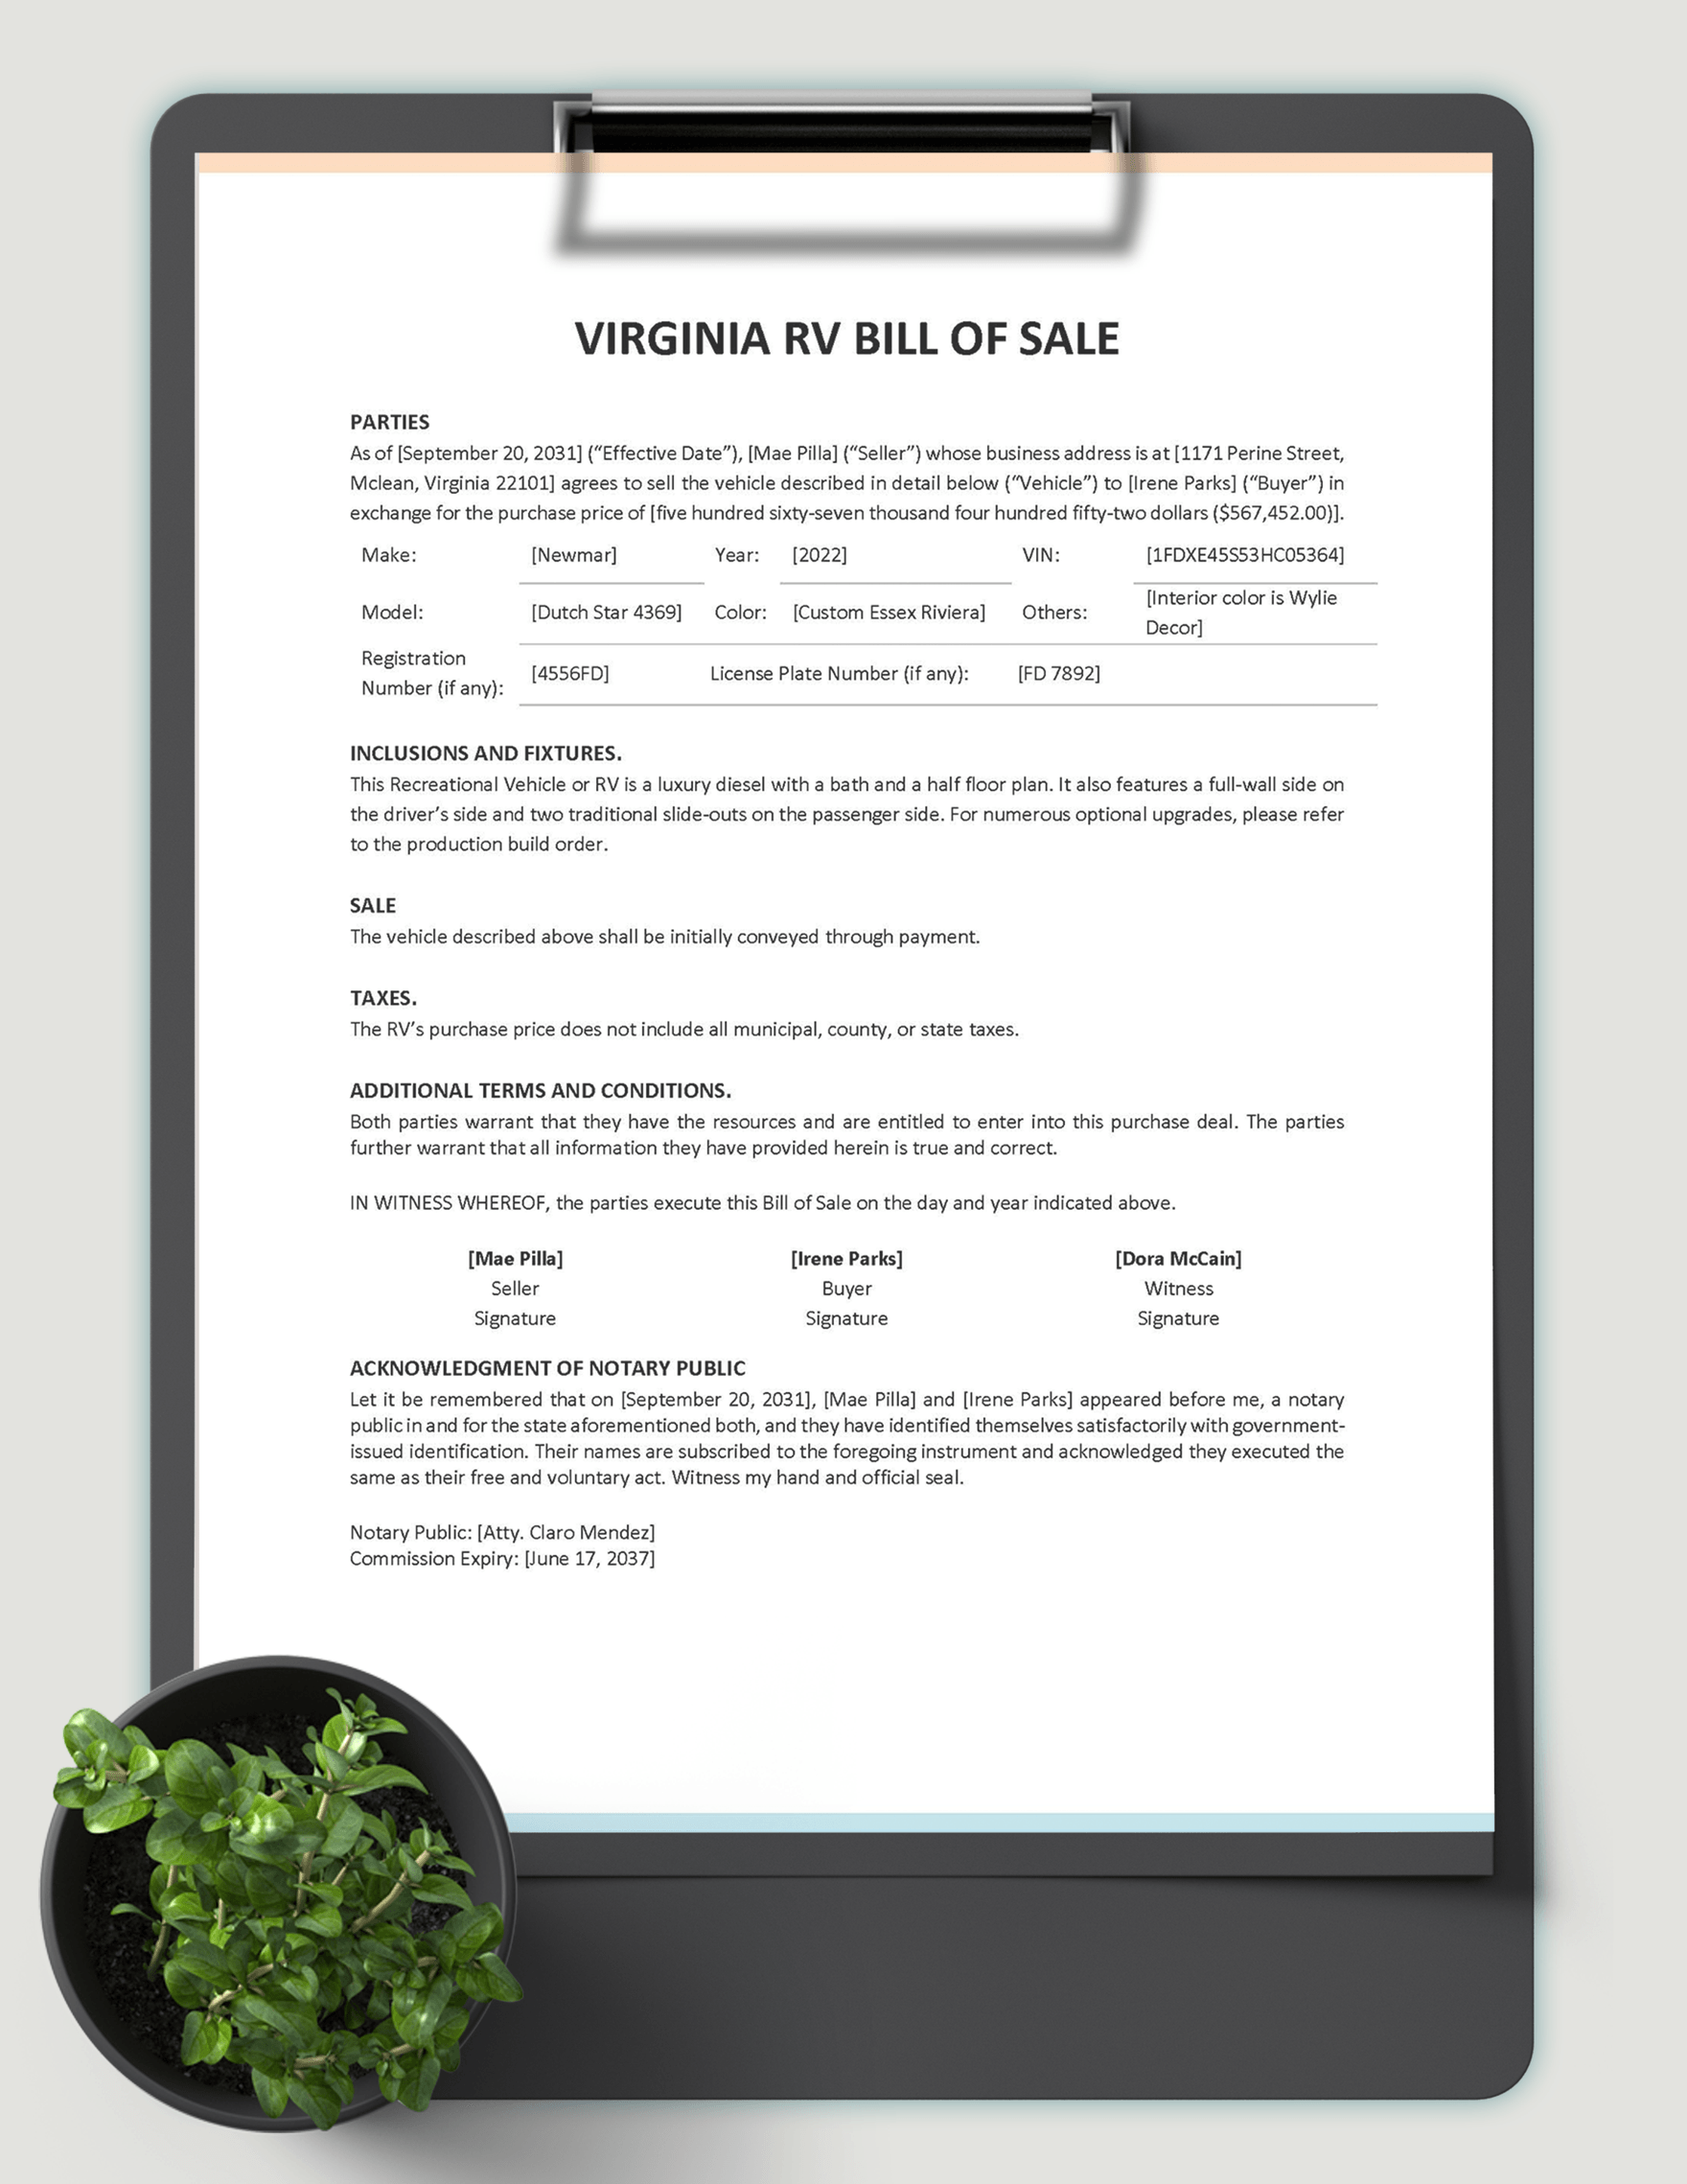 Virginia RV Bill of Sale Form Template